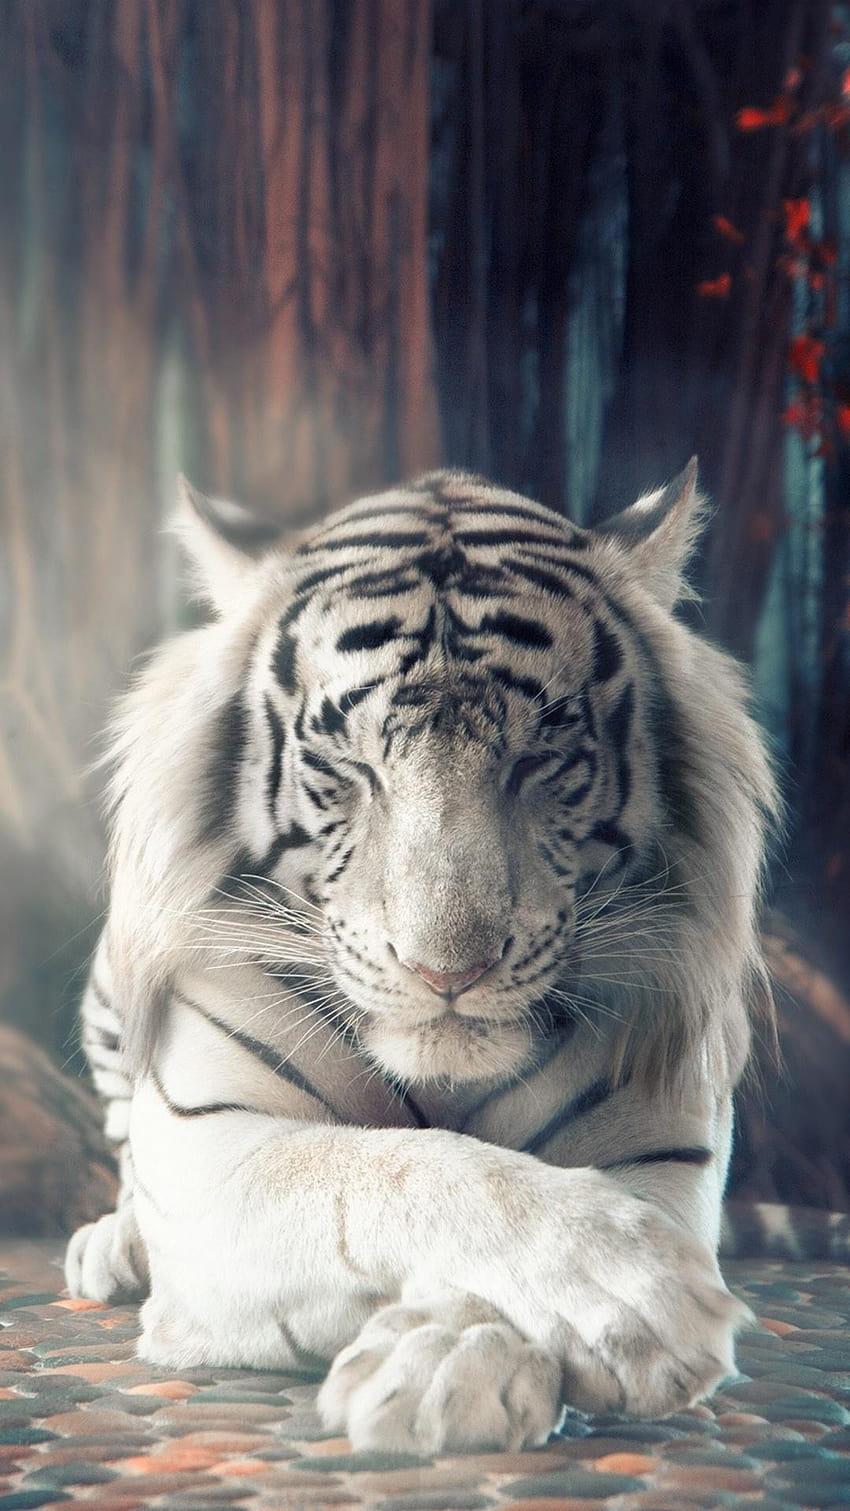 1080x1920 White Tiger Dreamy Iphone 7,6s,6 Plus, Pixel xl, beyaz kaplan hayvanı HD telefon duvar kağıdı